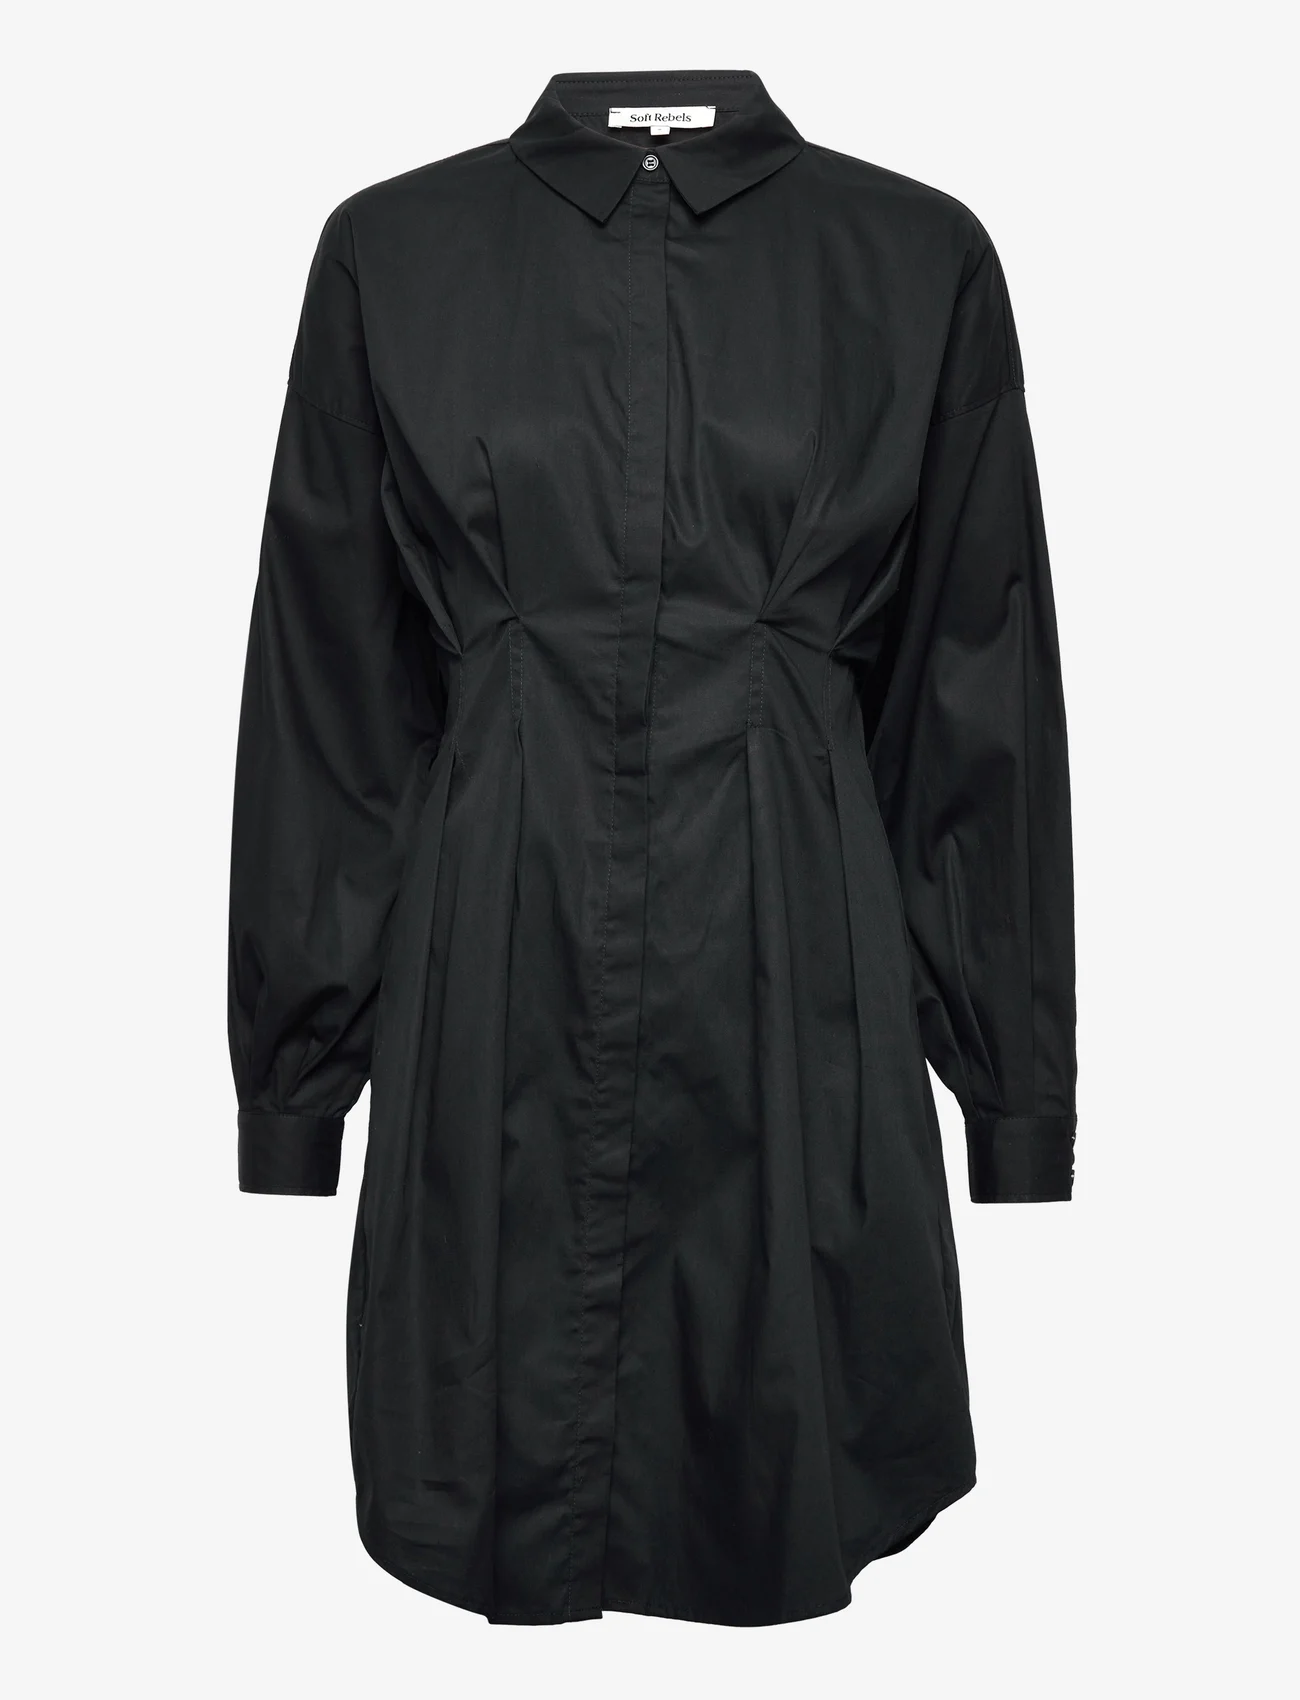 Soft Rebels - SREilja Dress GOTS - marškinių tipo suknelės - black - 0